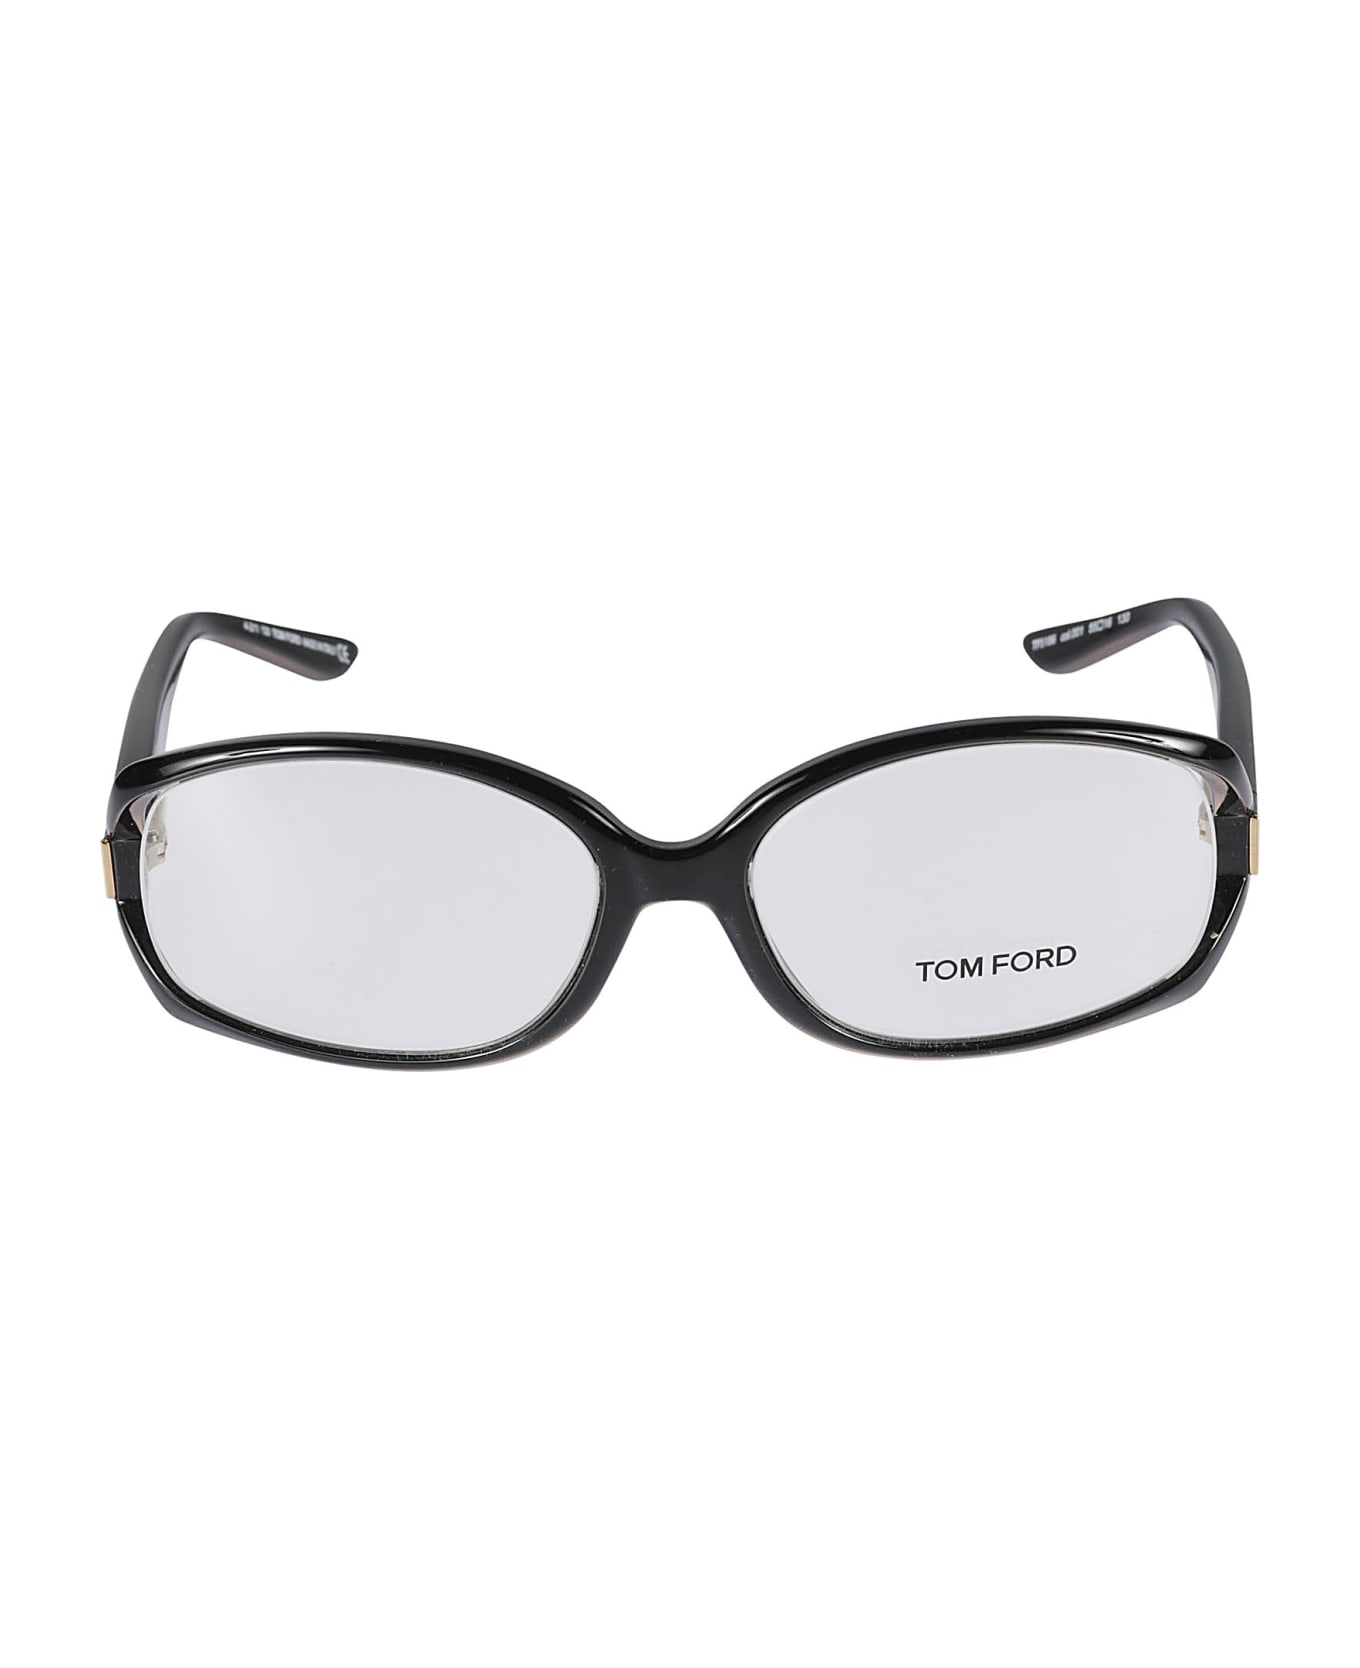 Tom Ford Eyewear Classic Clear Lense Glasses - 001